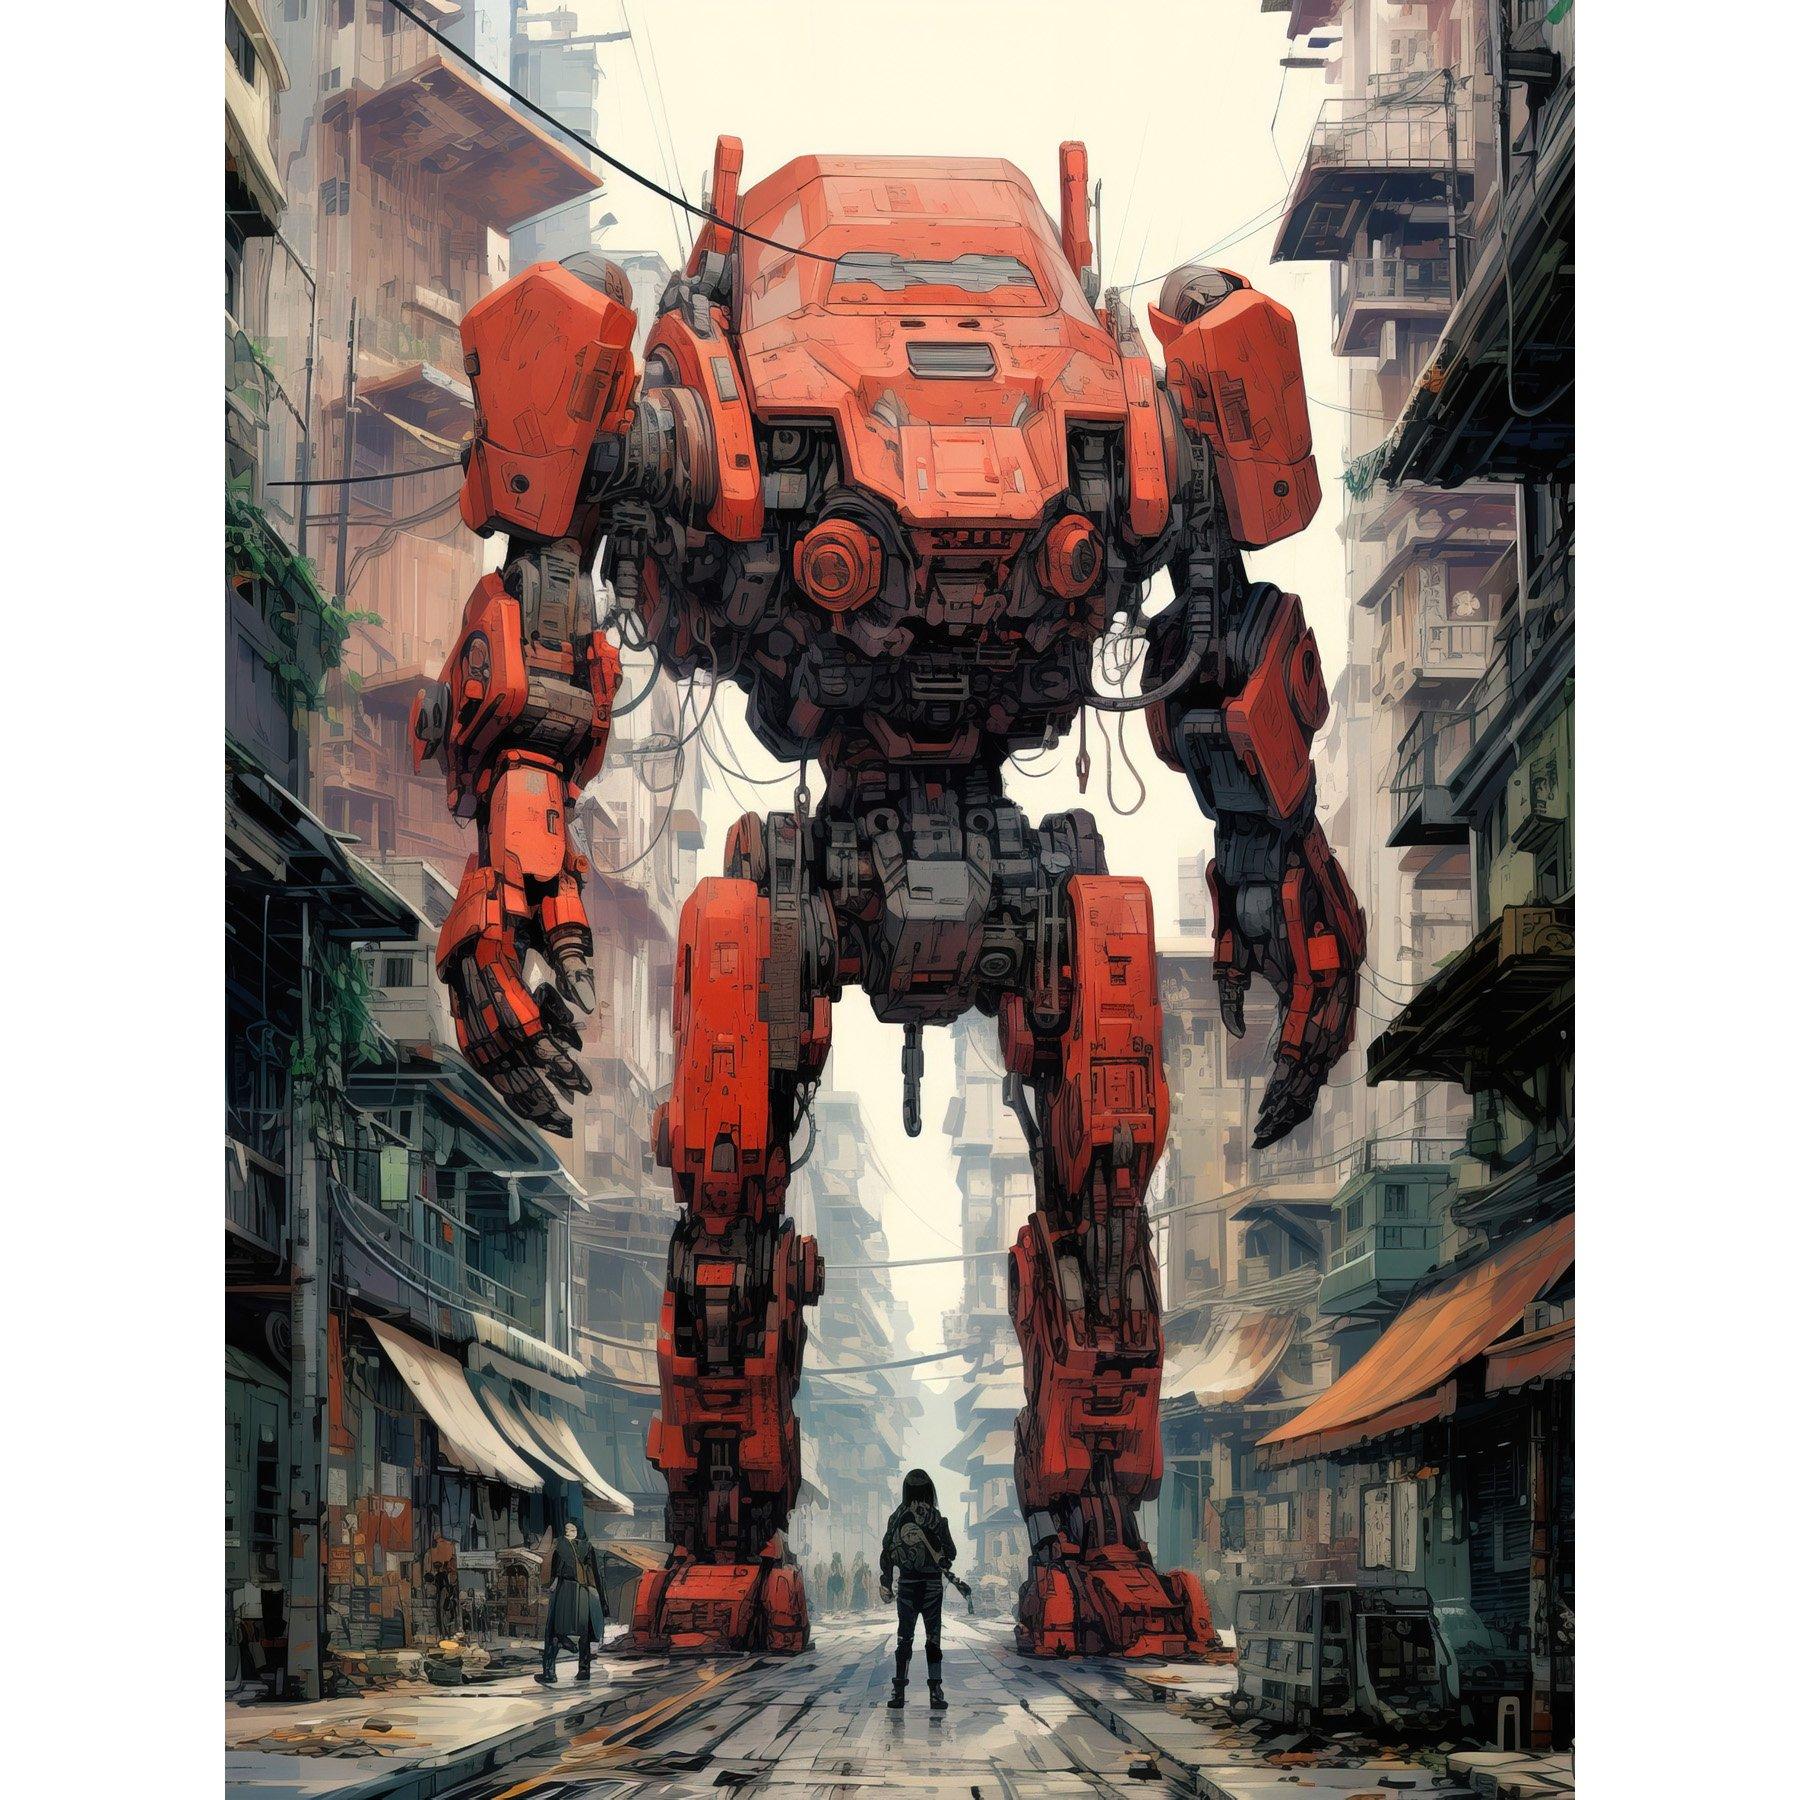 Artery8 Red Mecha Robot in City Street Anime Sci-Fi Artwork Giant Humanoid Machine Fantasy Science Fiction Unframed Wall Art Print Poster Home Decor Premium